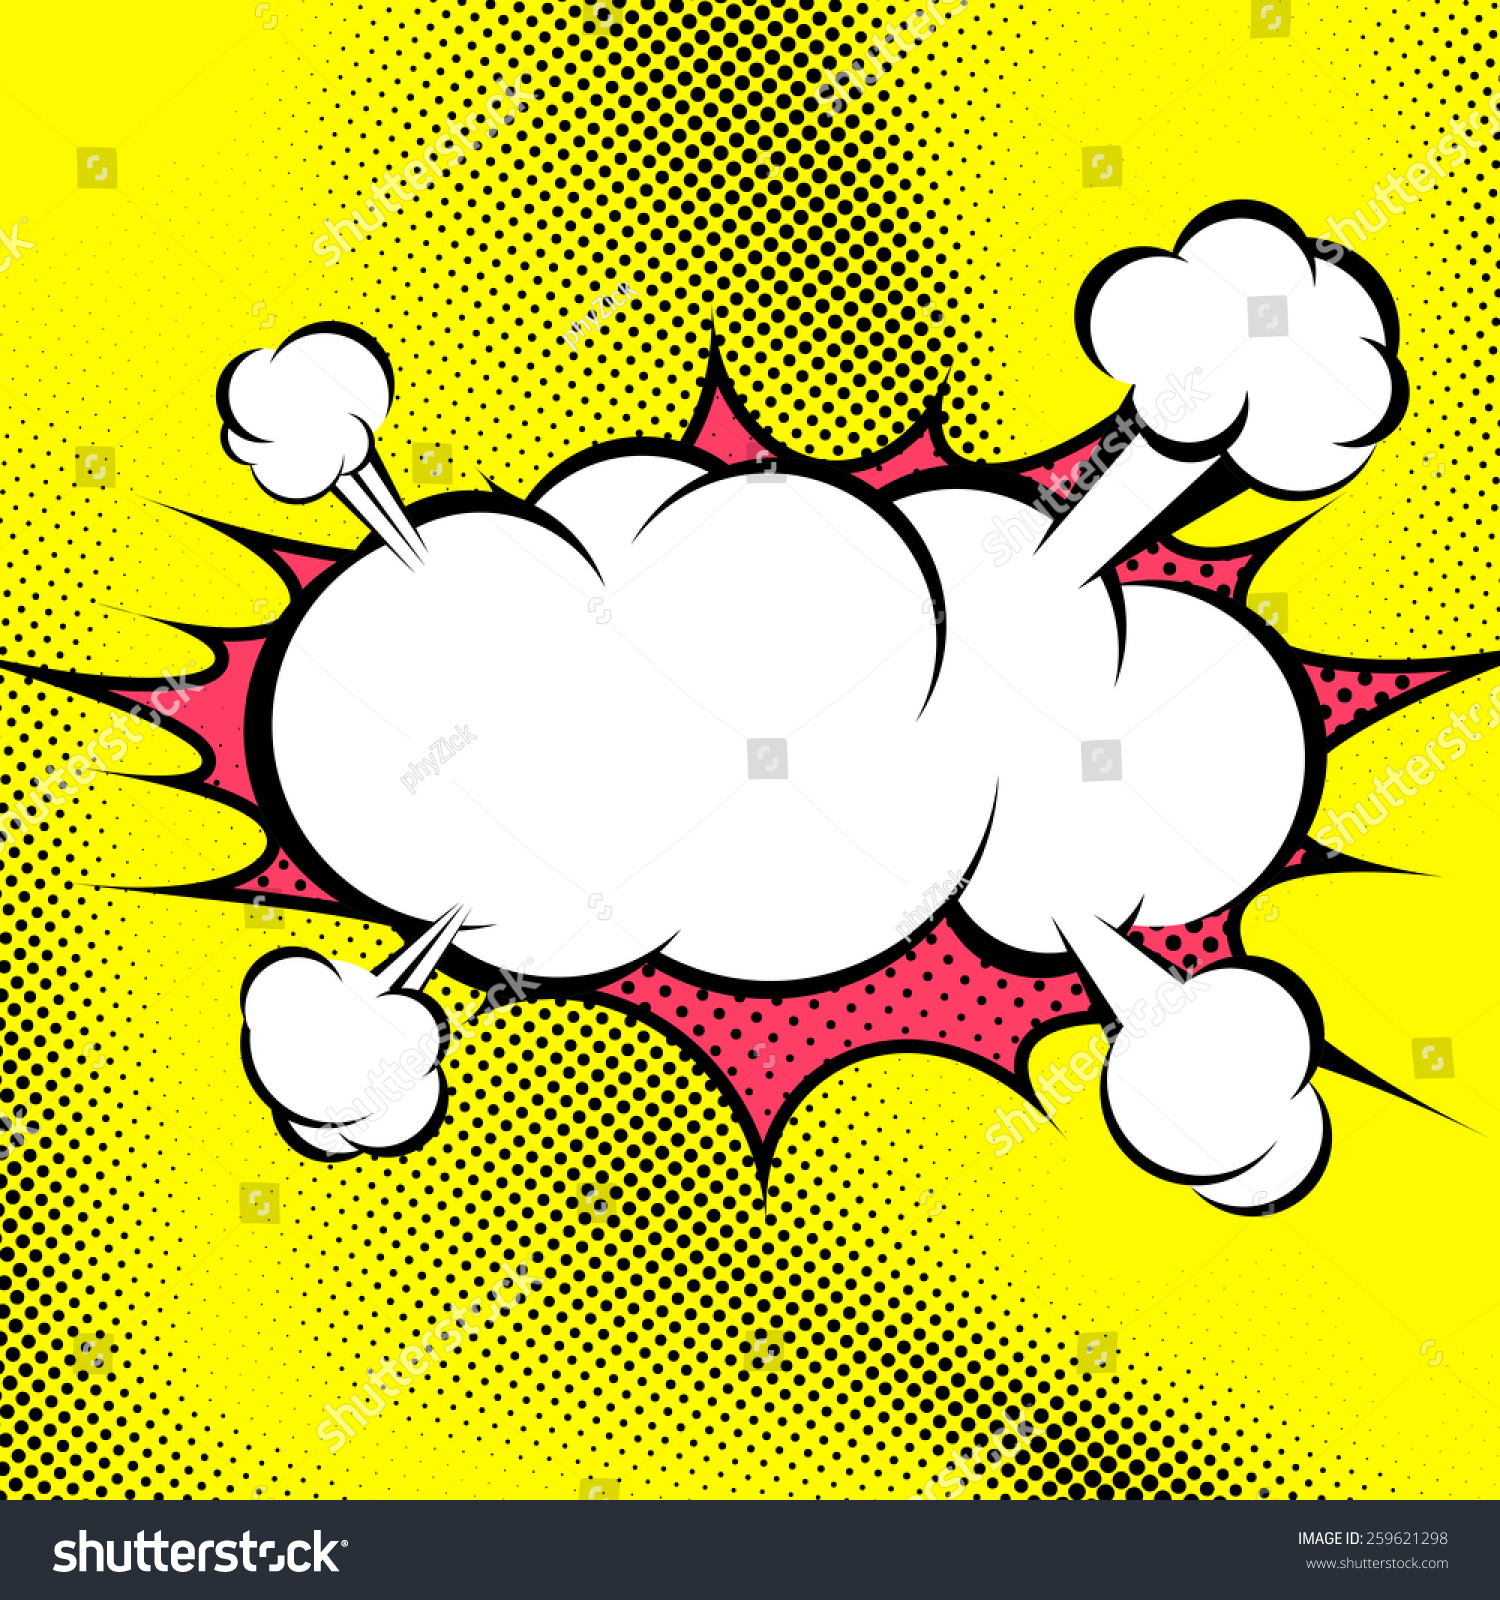 Big Retro Style Comic Book Explosion Cloud Template ...